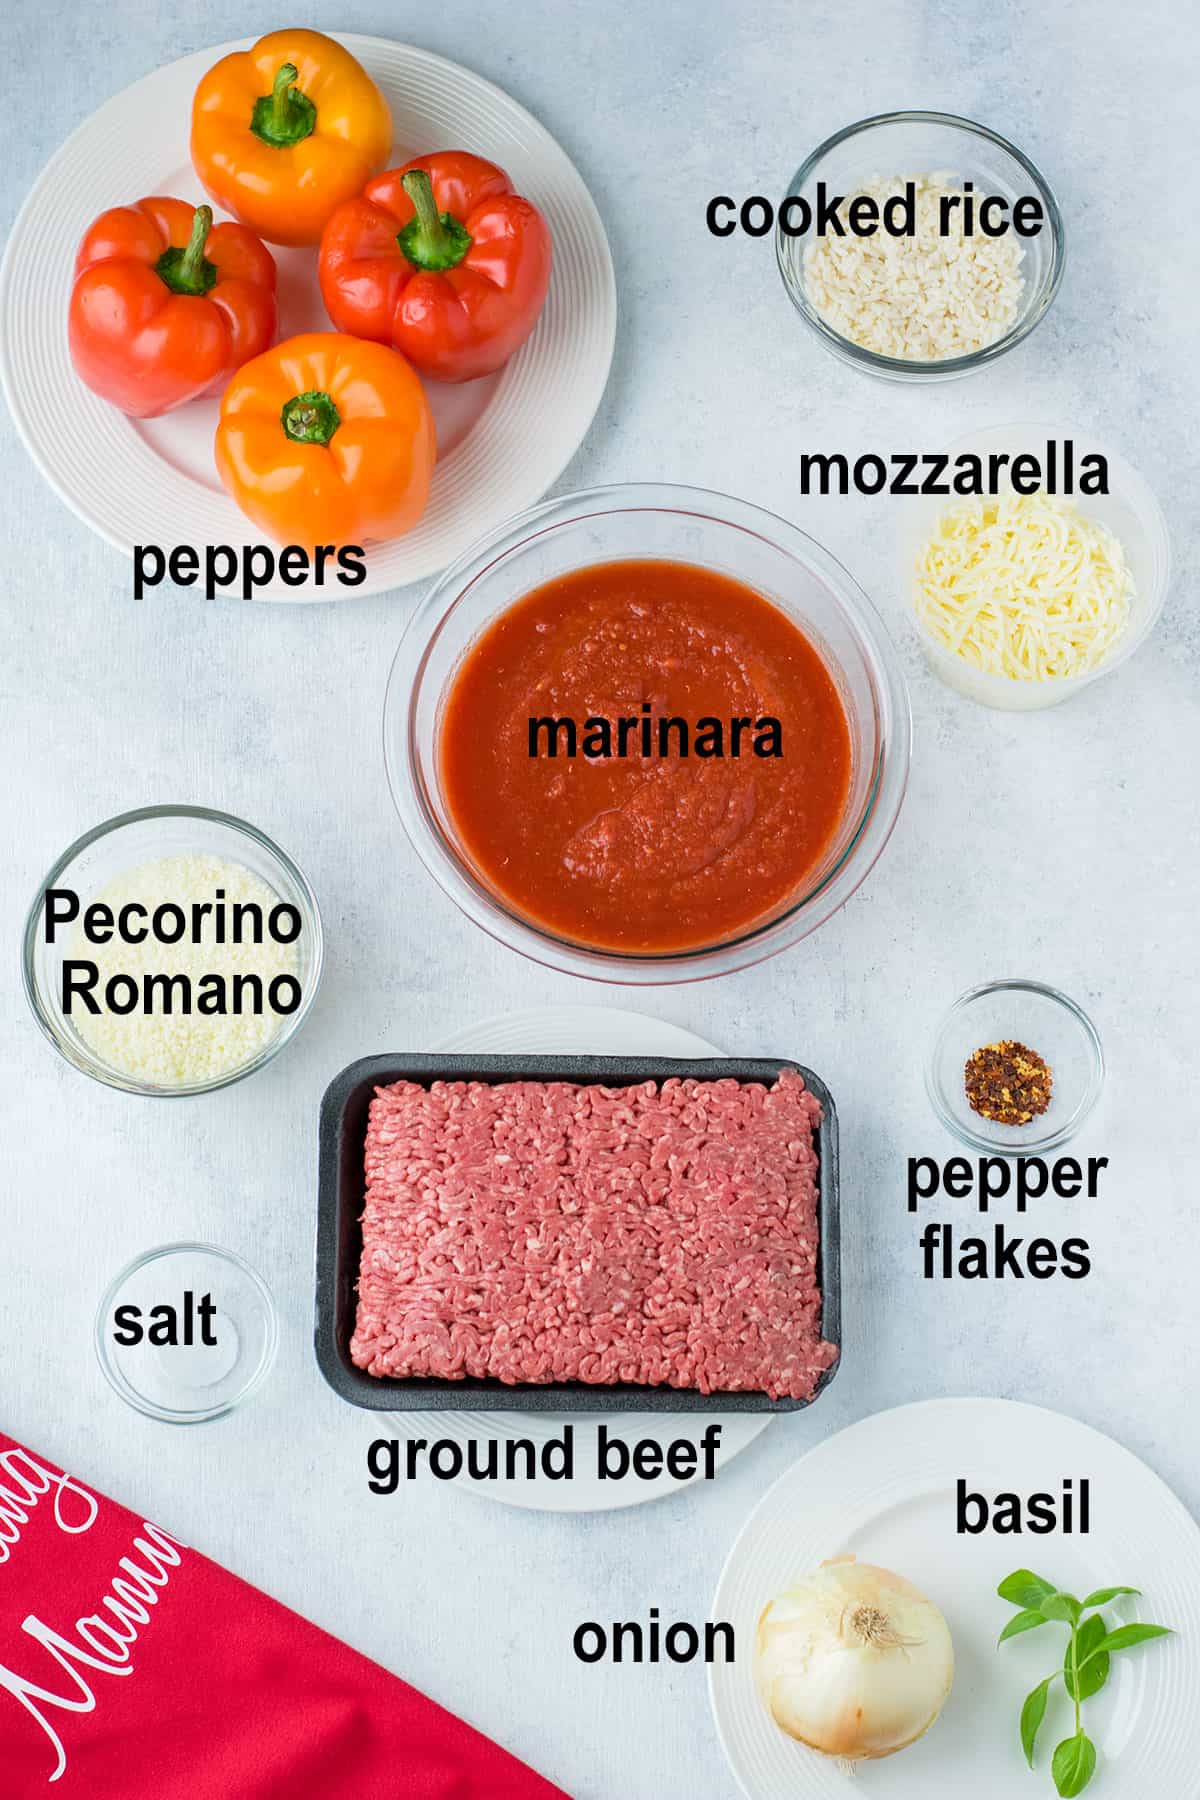 peppers, rice, sauce, cheese, meat, seasonings, onion, basil 